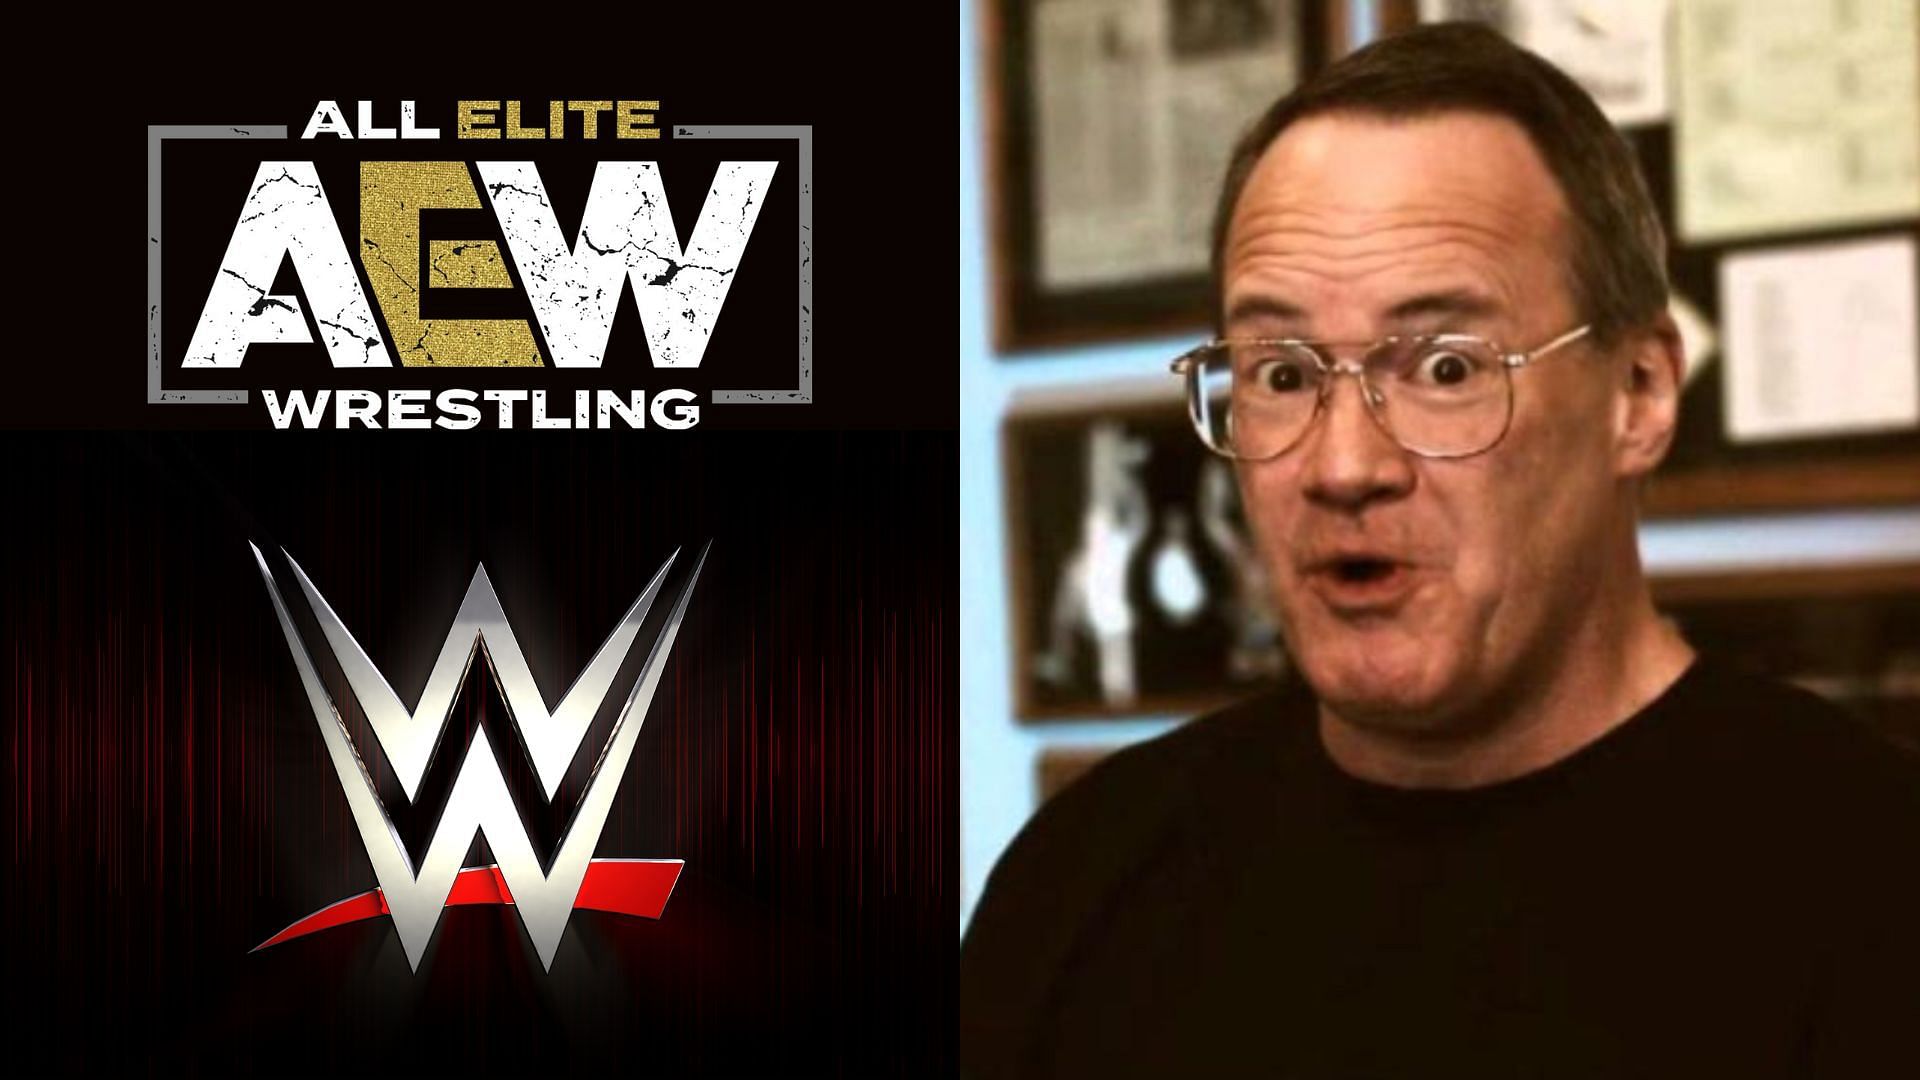 AEW and WWE logo (left), Jim Cornette (right)